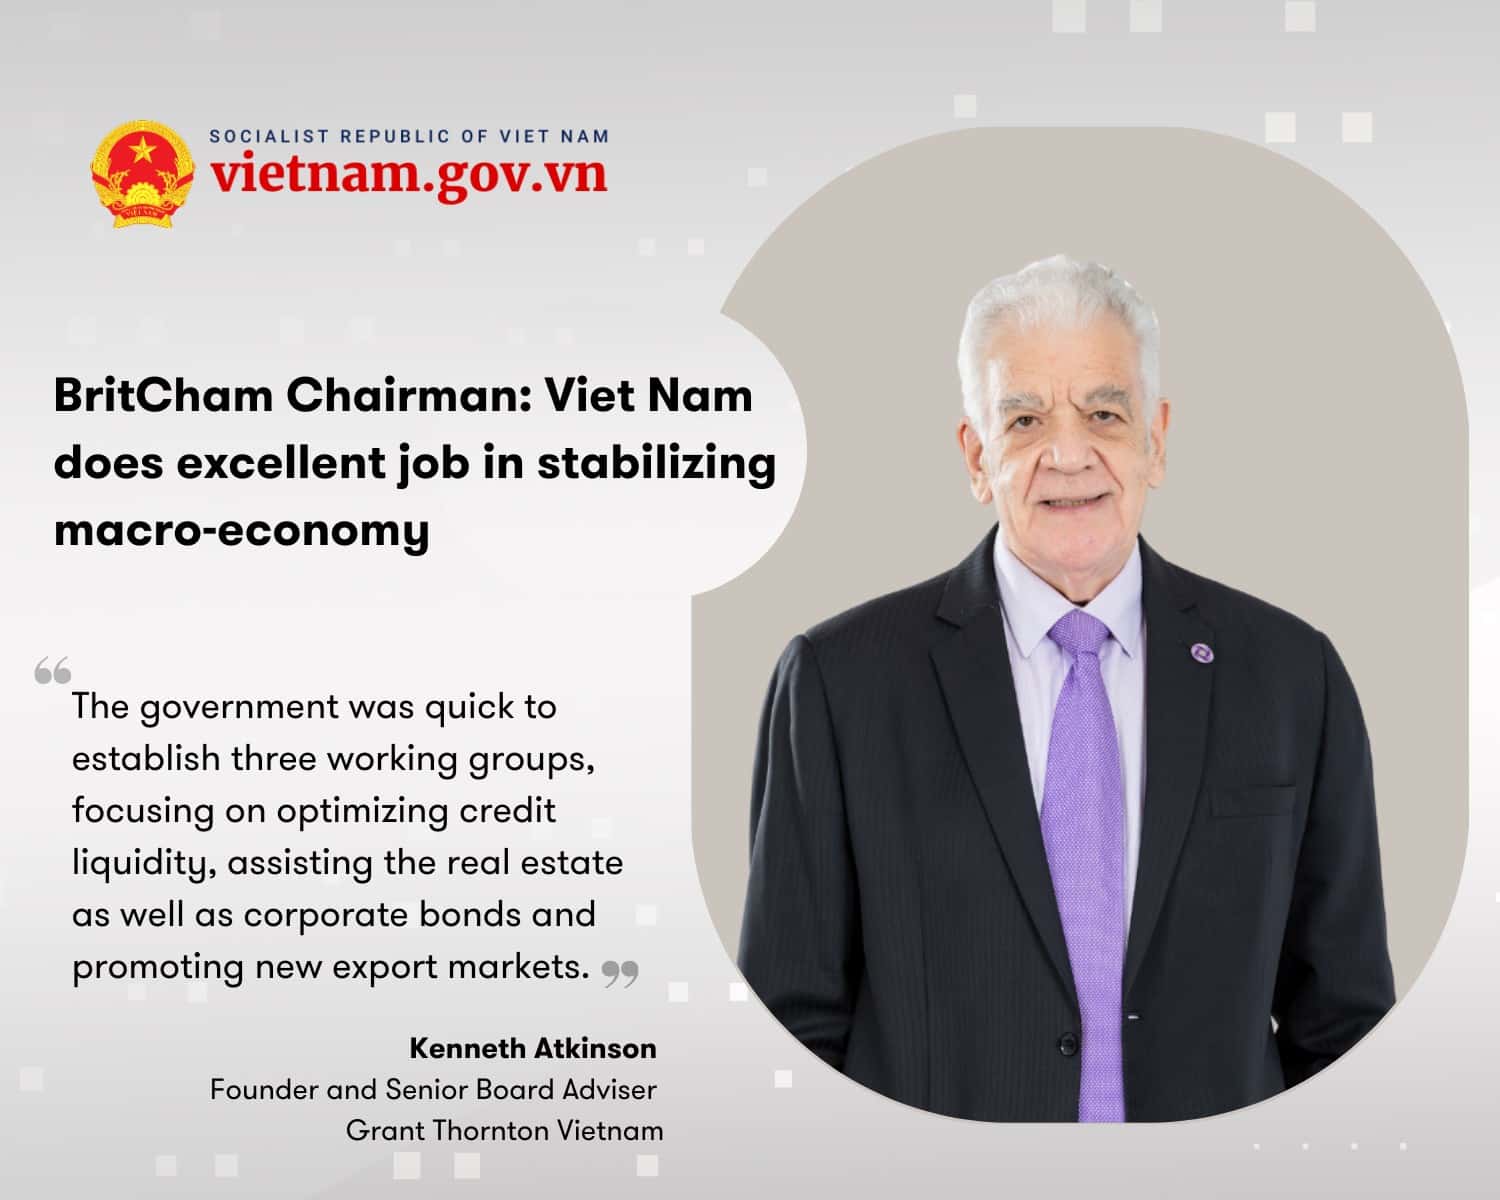 BritCham Chairman: Viet Nam does excellent job in stabilizing macro-economy